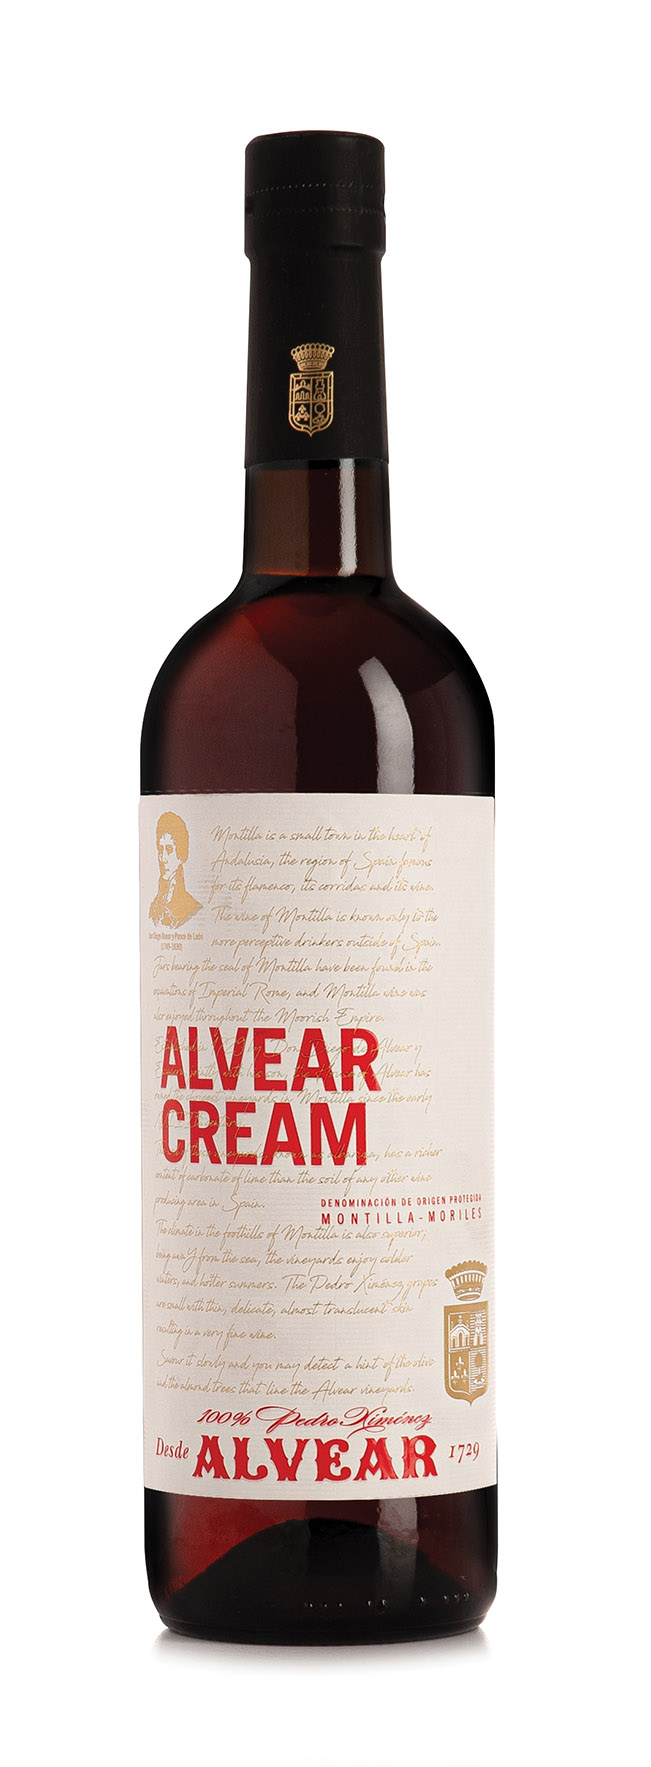 Alvear Cream Bottle Photo